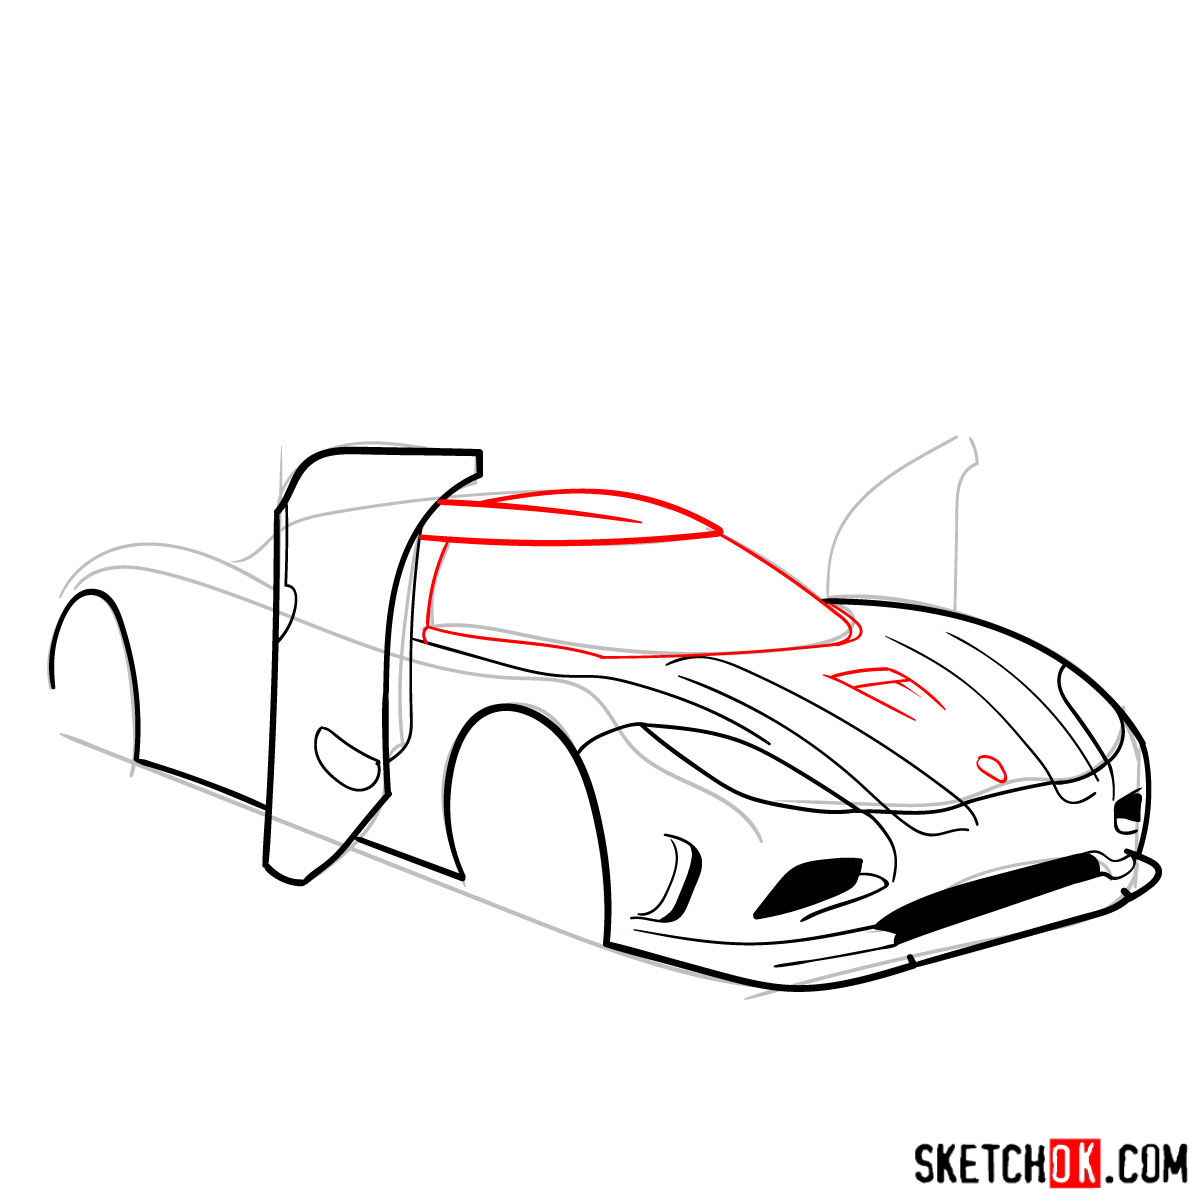 How to draw Koenigsegg Agera R Oman - step 07